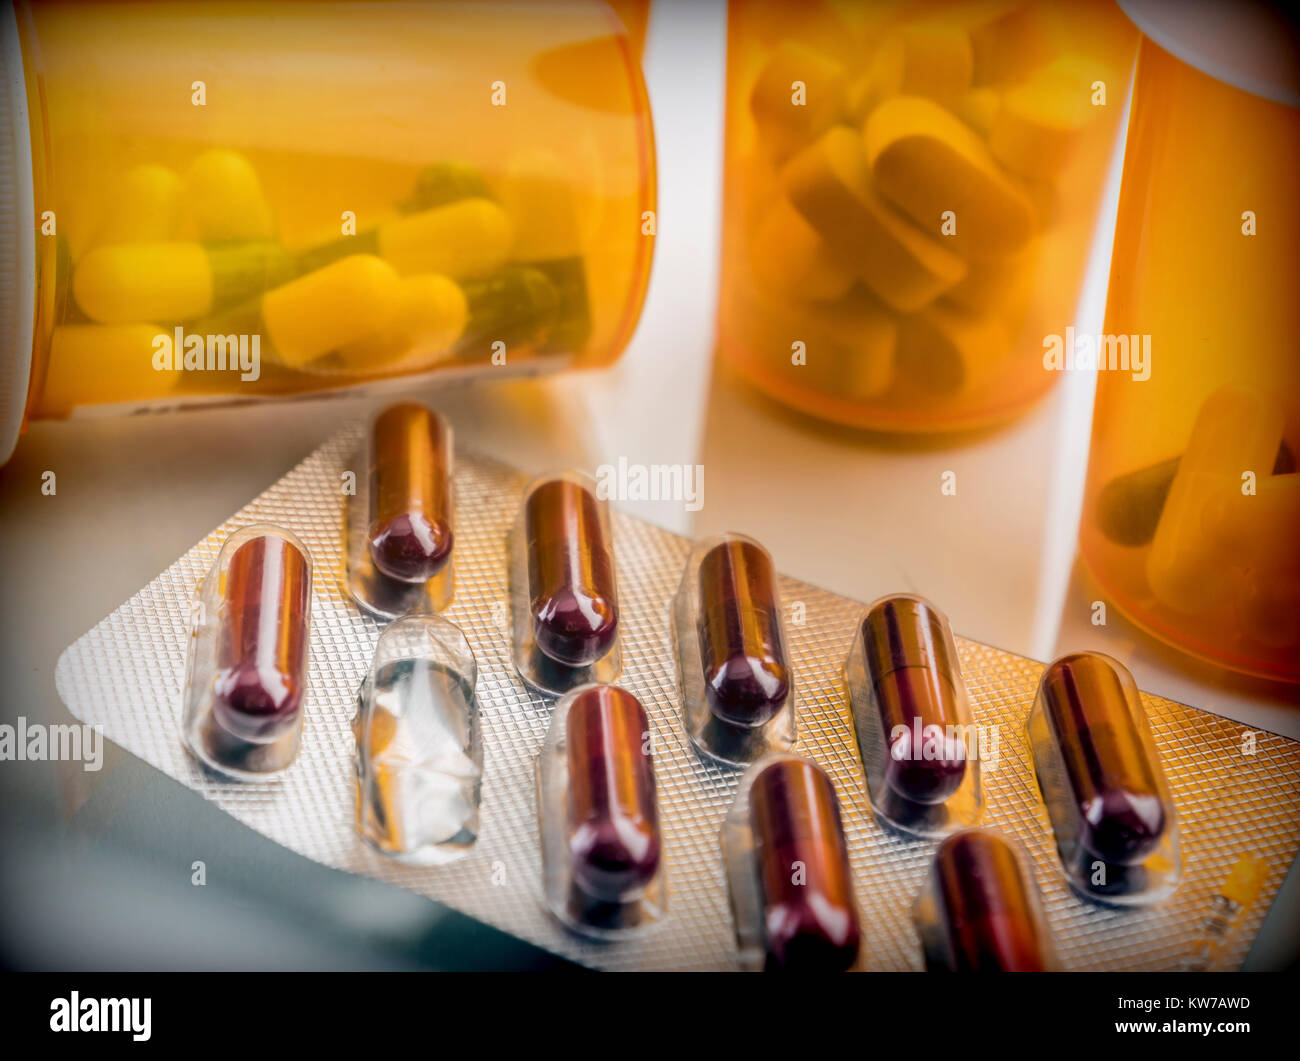 Boats of medicine amber transparent, conceptual image Stock Photo